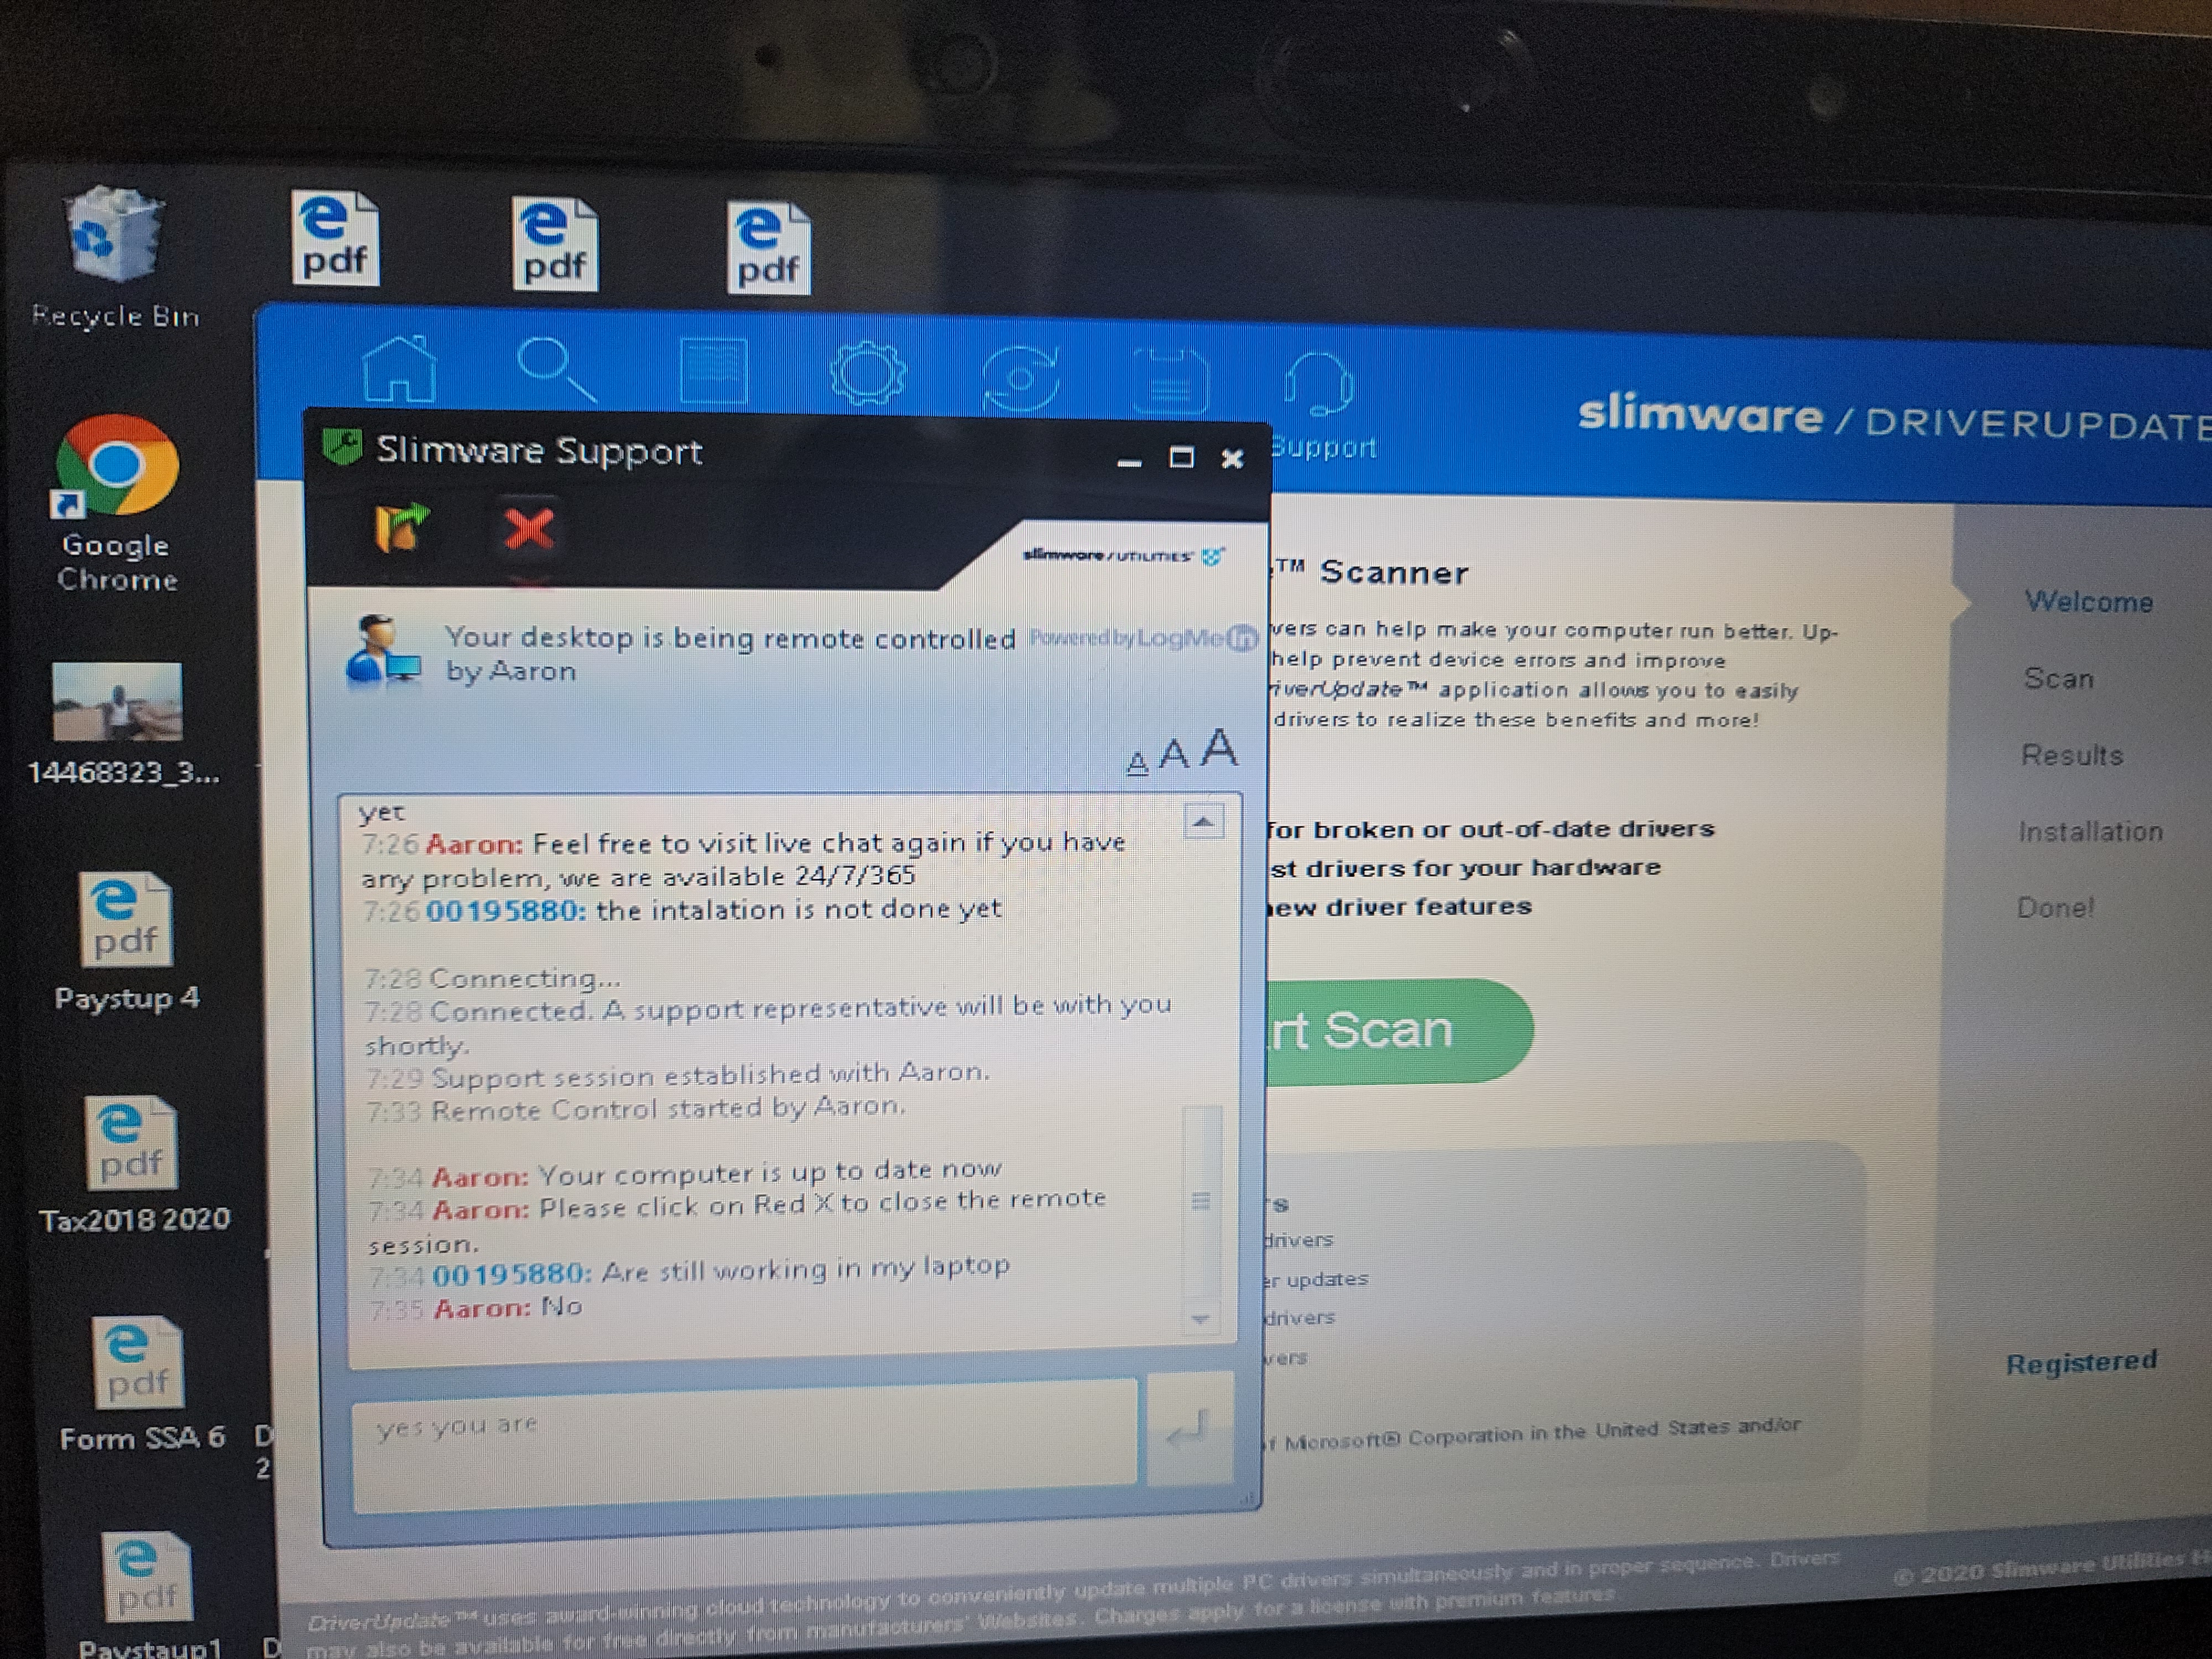 slimware driver update review